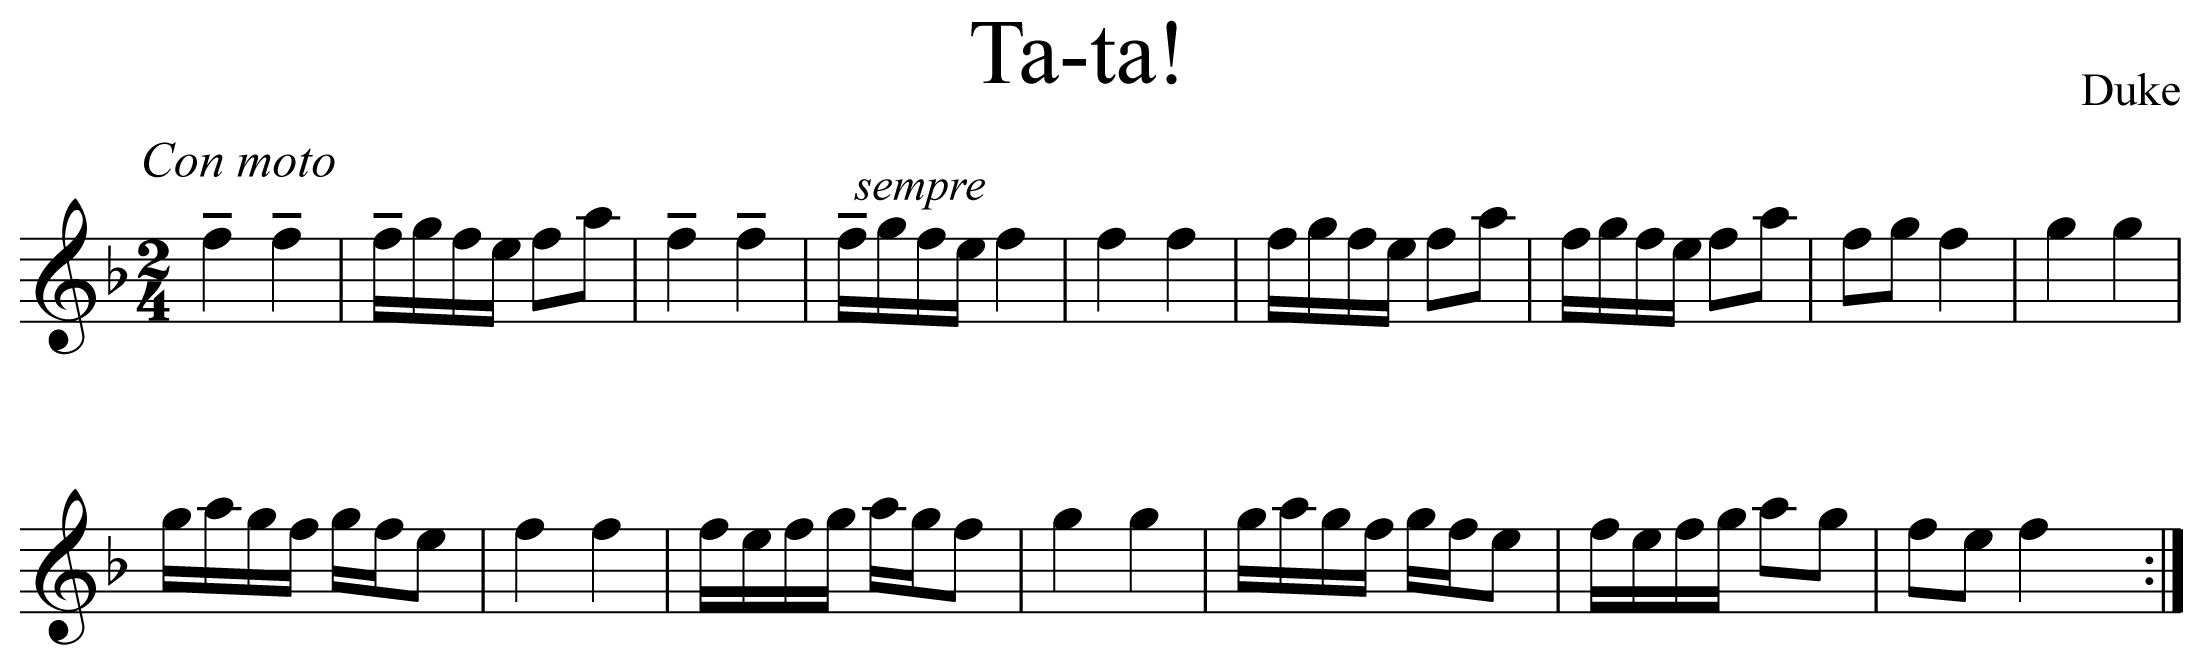 Ta-ta! Notation Flute